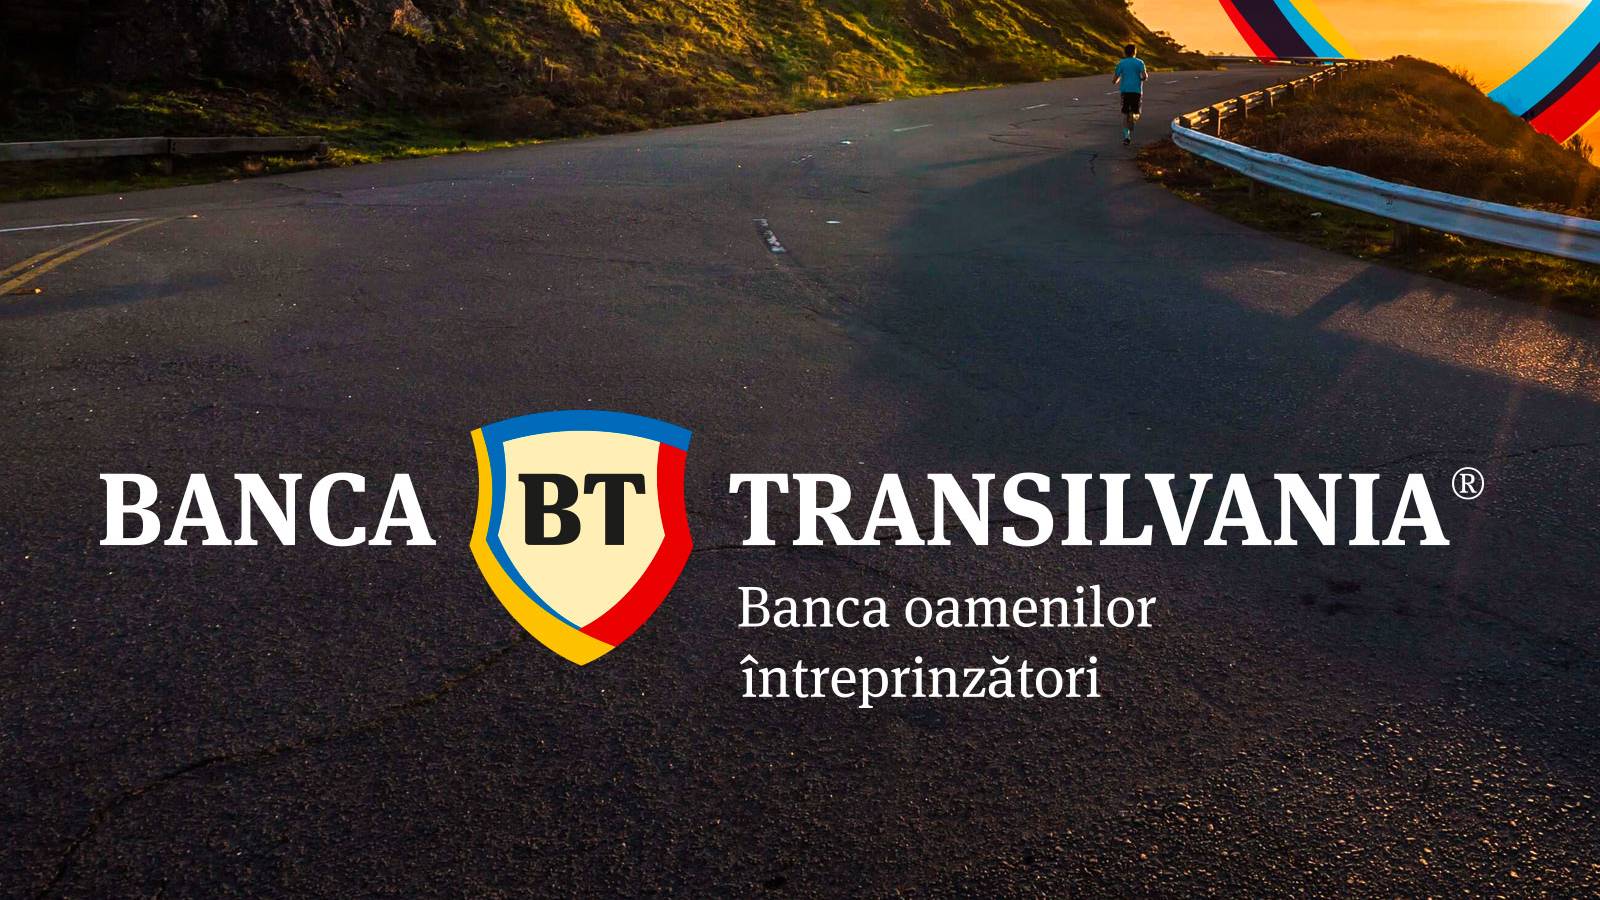 BANCA Transilvania pays